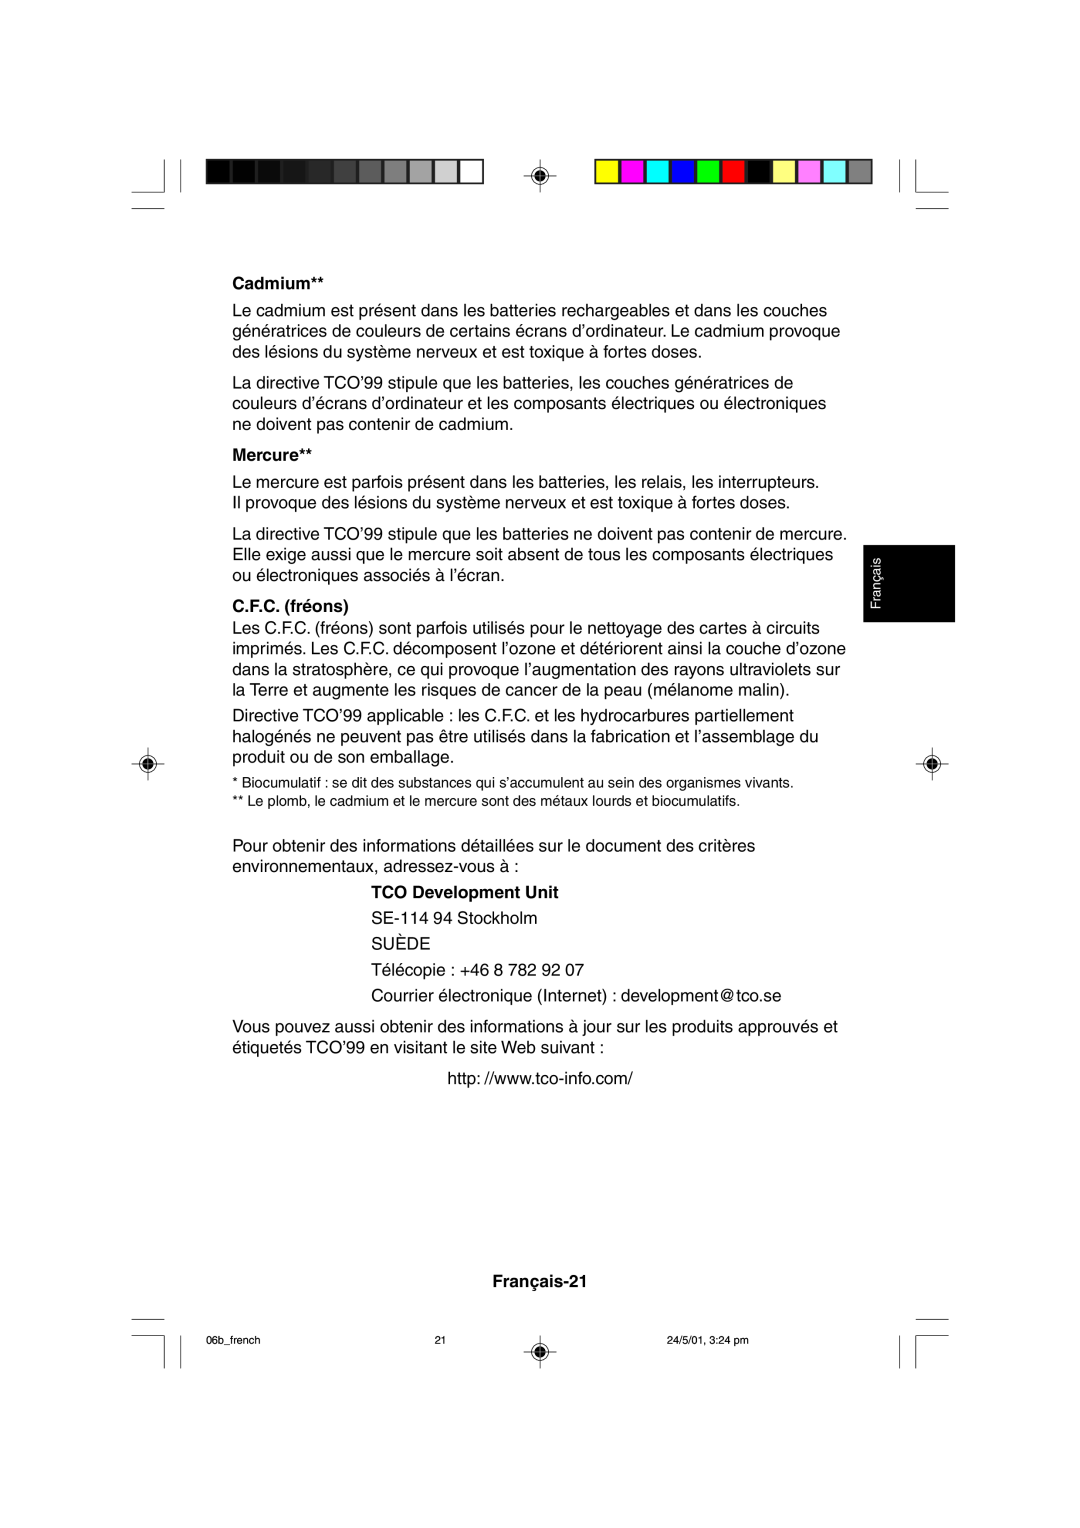 Mitsubishi Electronics M557 user manual Cadmium, Mercure, C.F.C. fréons, TCO Development Unit, Français-21 